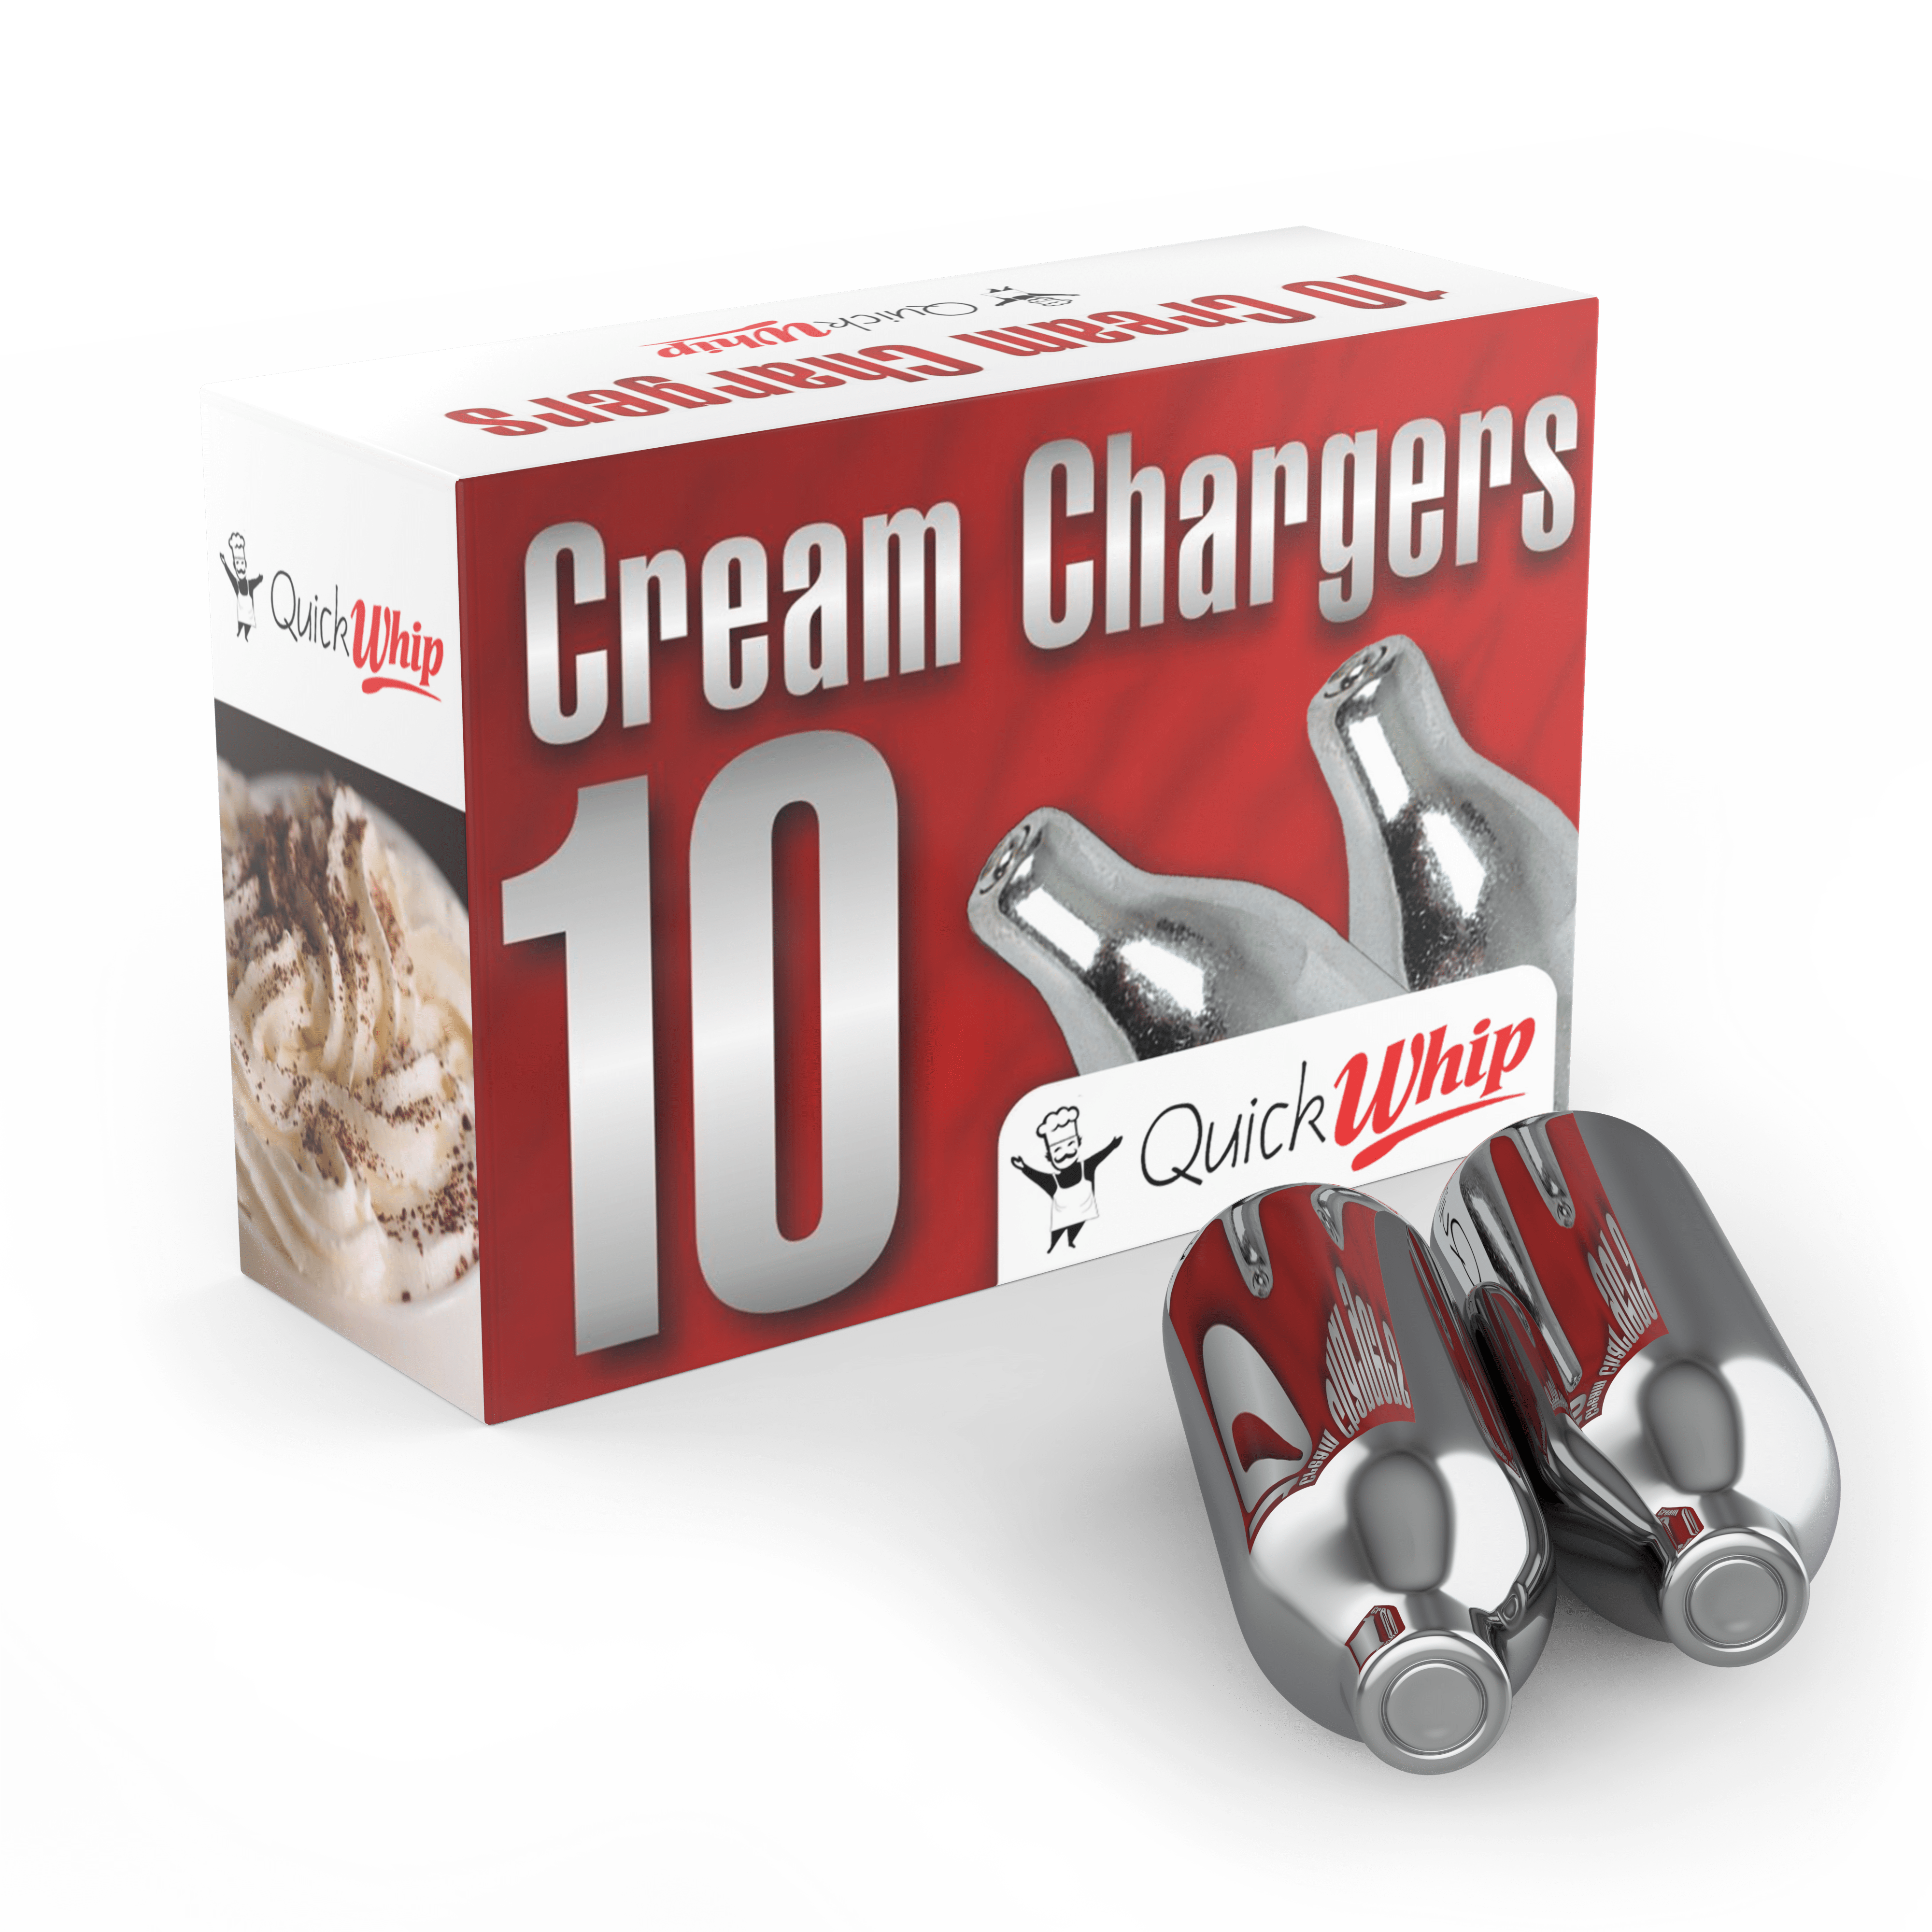 QuickWhip Cream Chargers 8g - 10pks